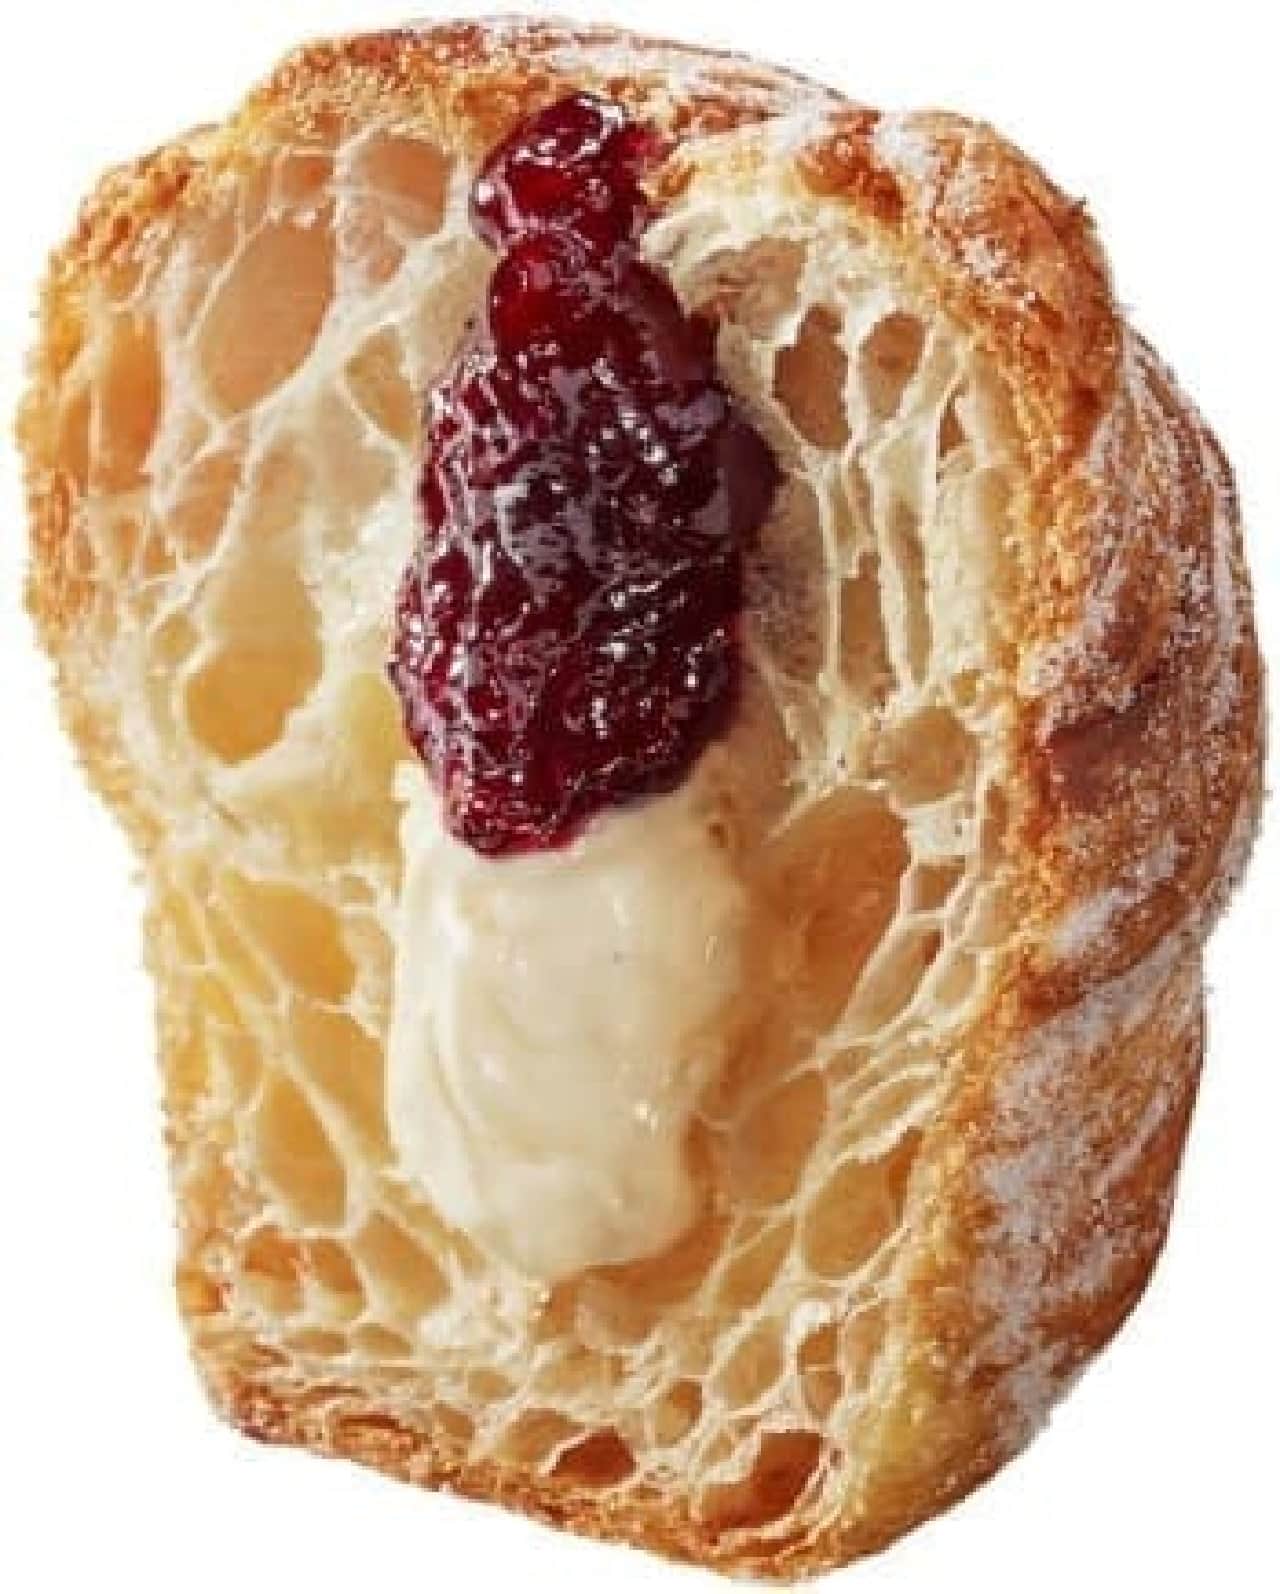 Mister Donut "Croissant Muffin"